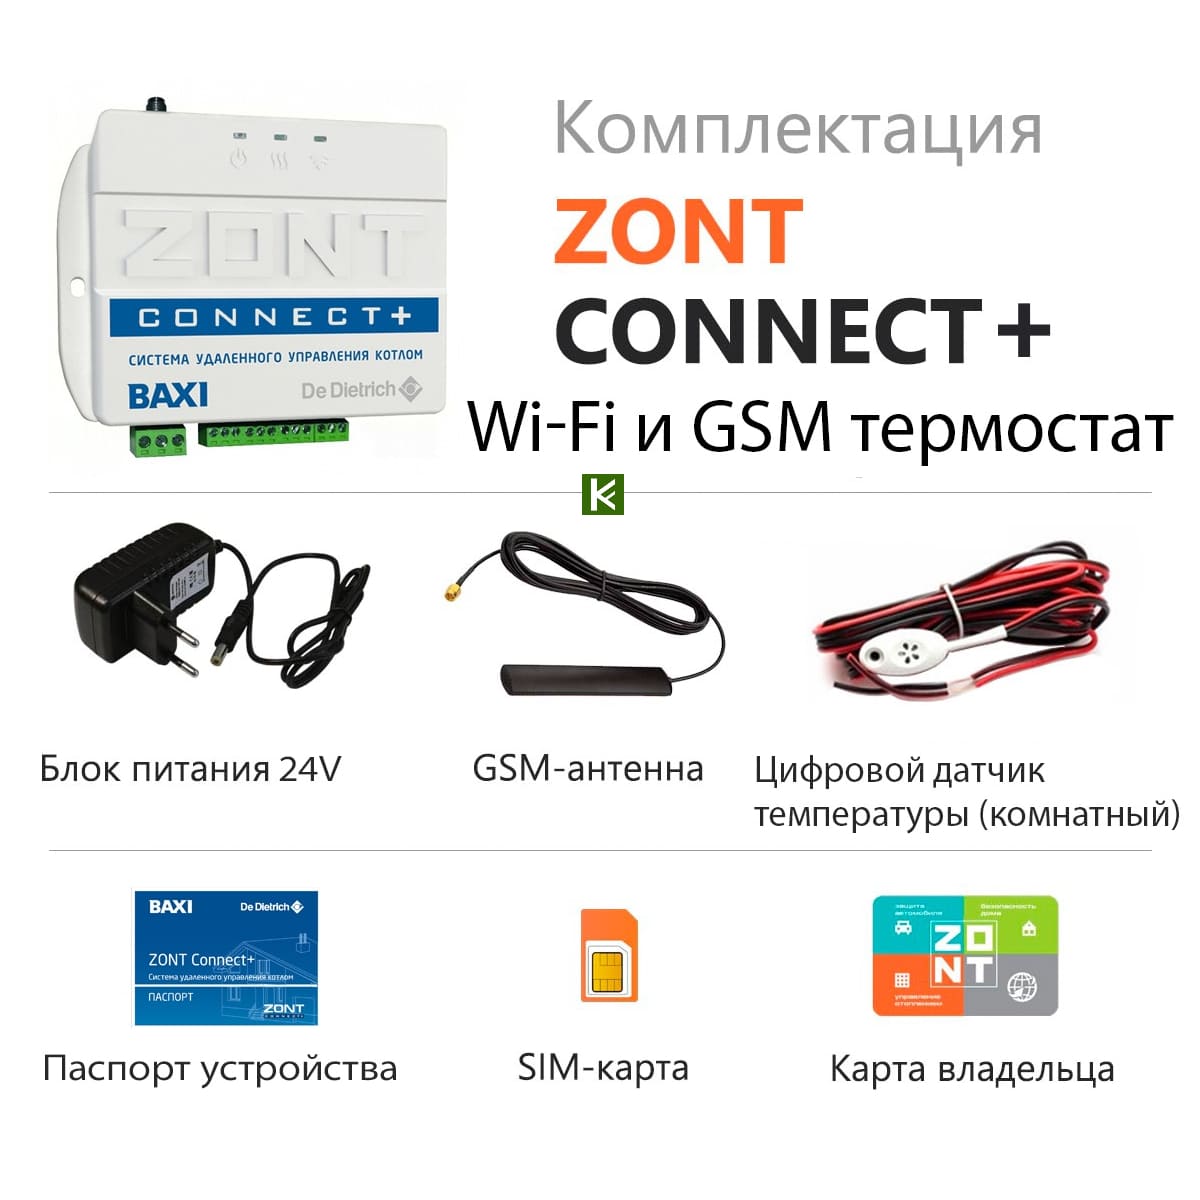 Zont котел baxi. Zont connect Baxi. Система удаленного управления котлом Baxi connect+. Zont connect+ GSM термостат для газовых котлов Baxi. Система удаленного управления котлом Zont Baxi connect+ (ml00004934).